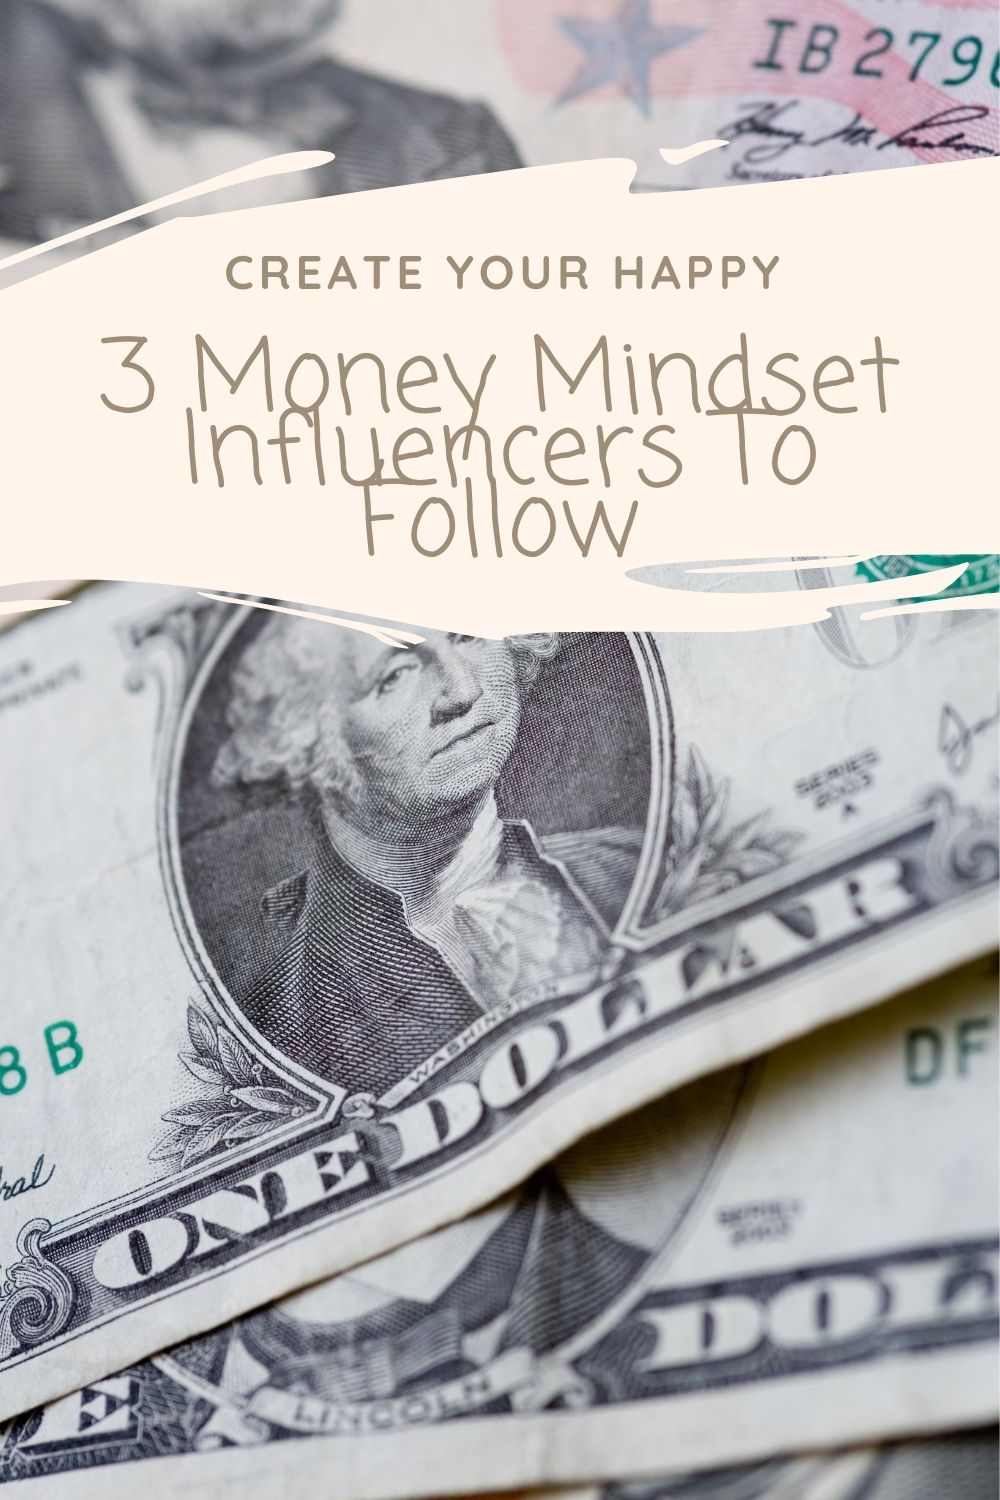 3 Money Mindset Influencers to Follow